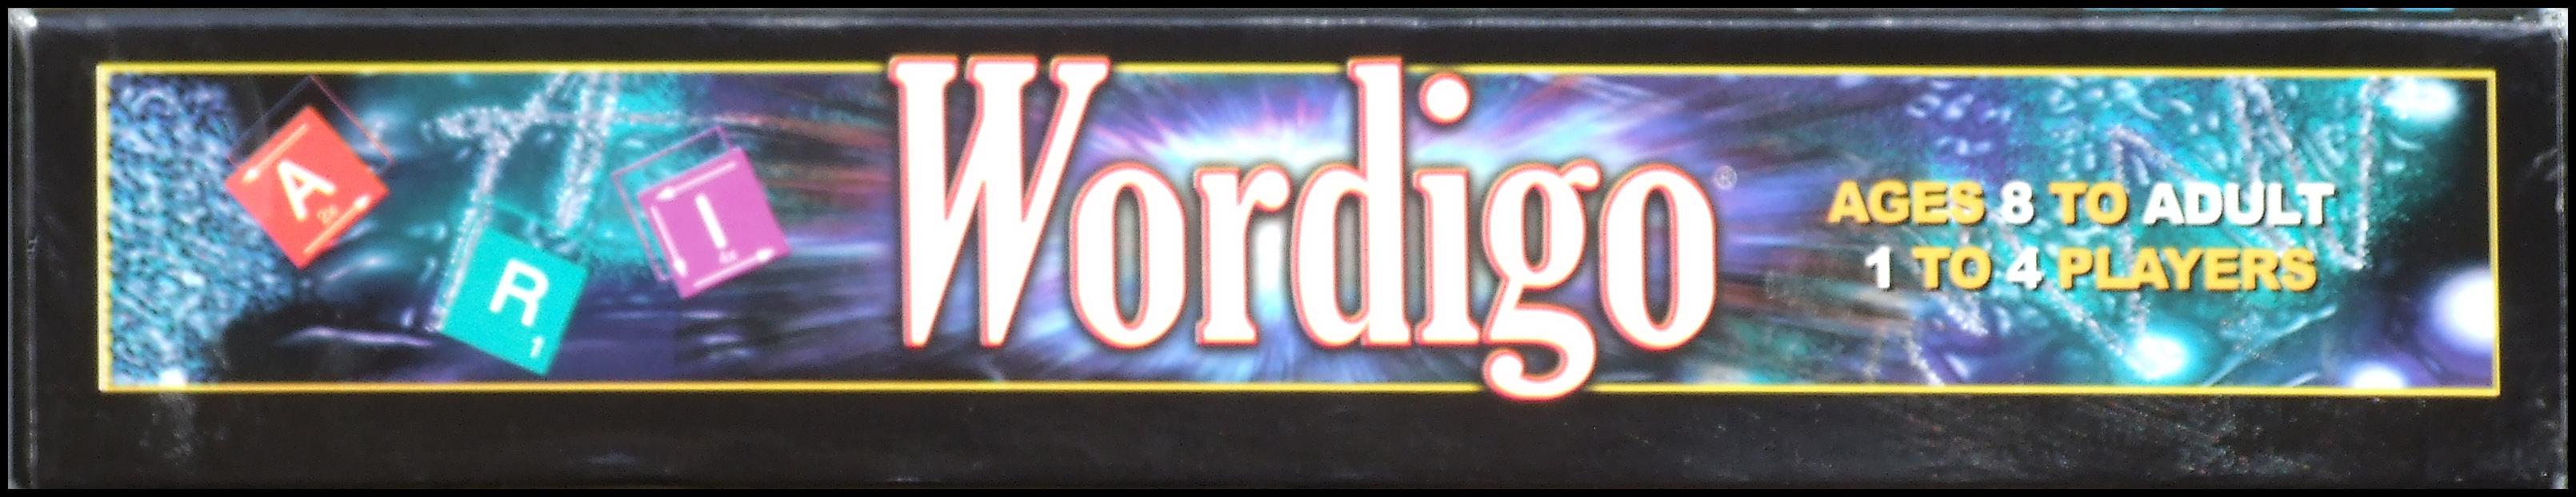 Wordigo - Box Side 1